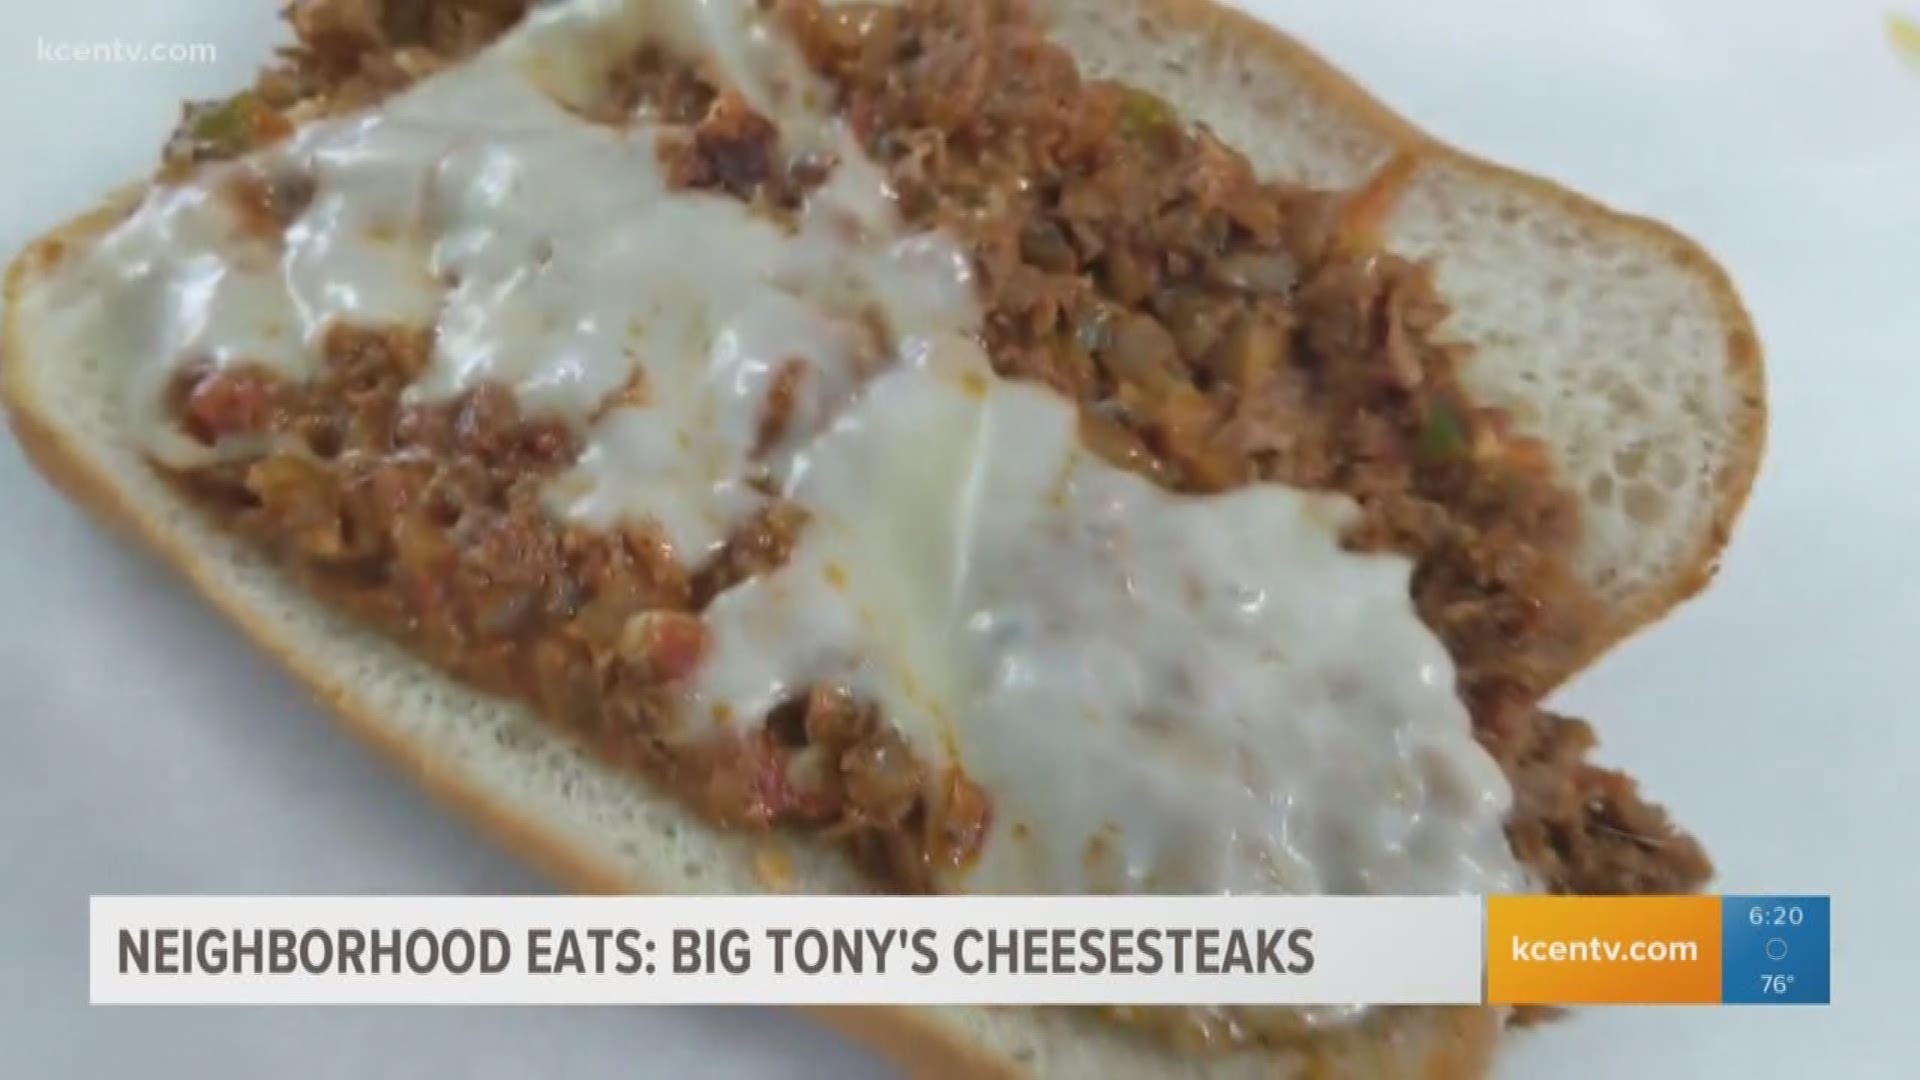 We're exploring tasty cheesesteaks at Big Tony's in Salado.